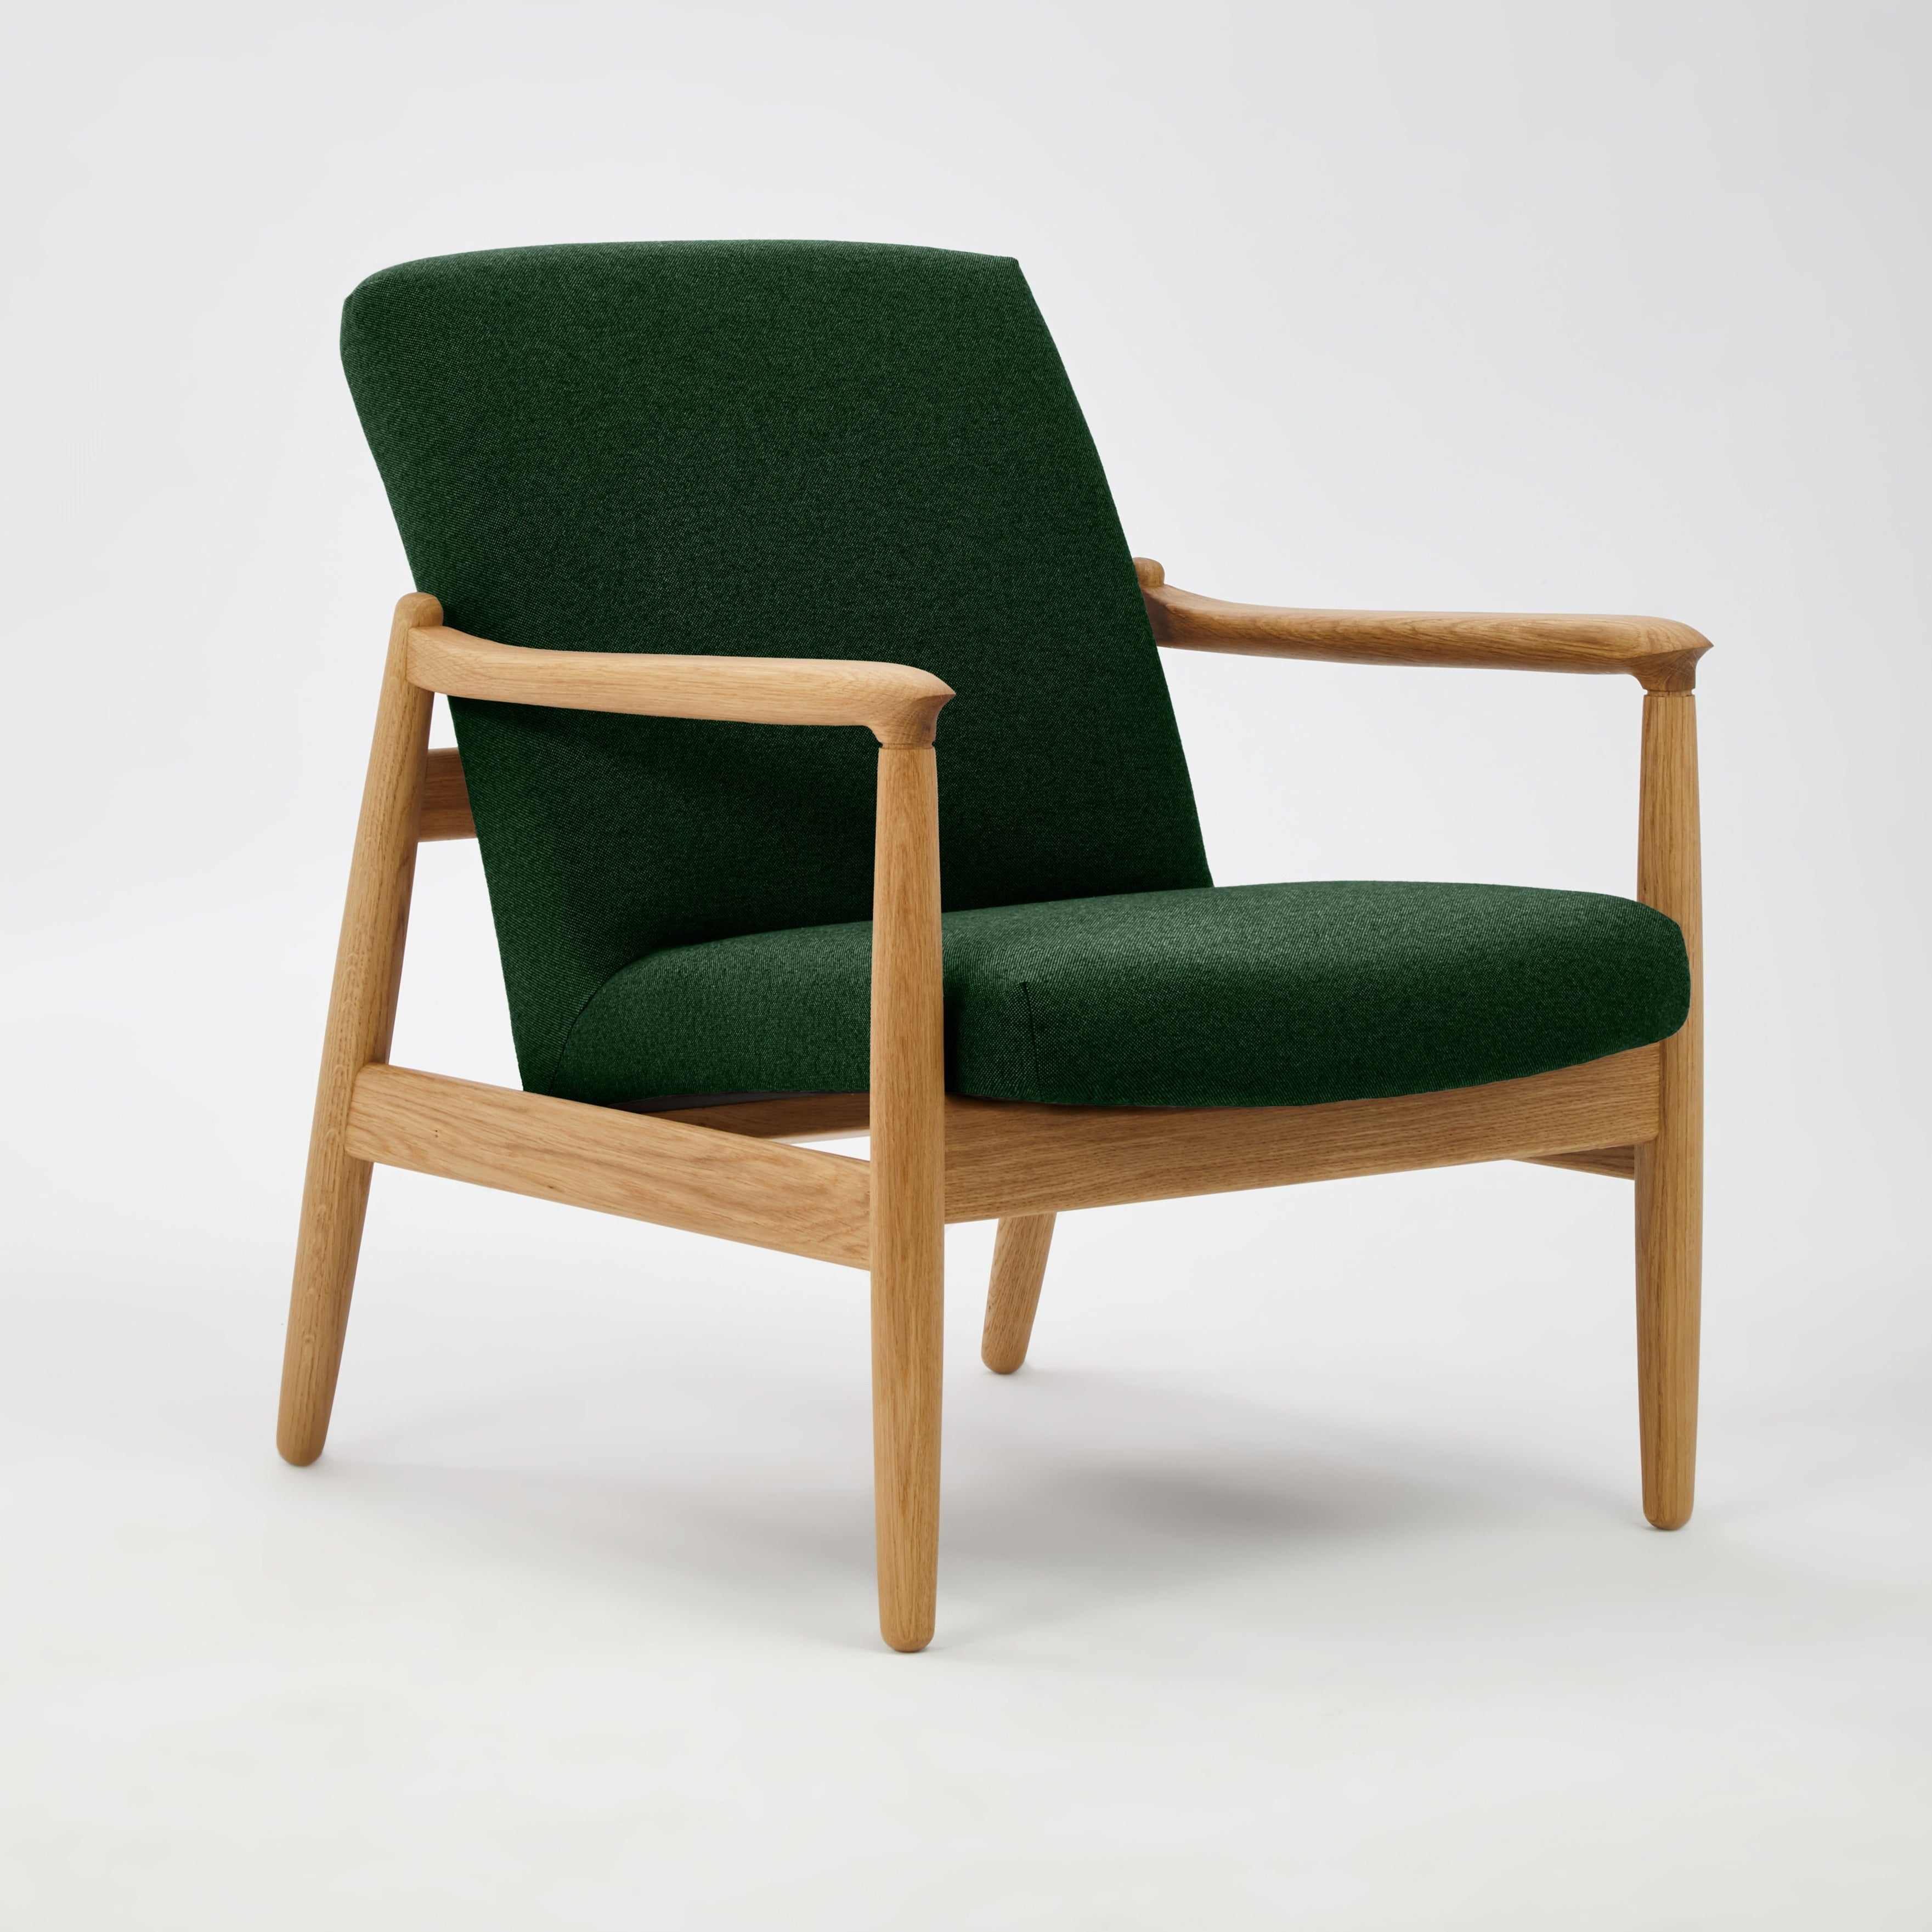 H 64 Lowback Chair oak white finish frame upholstery colour green